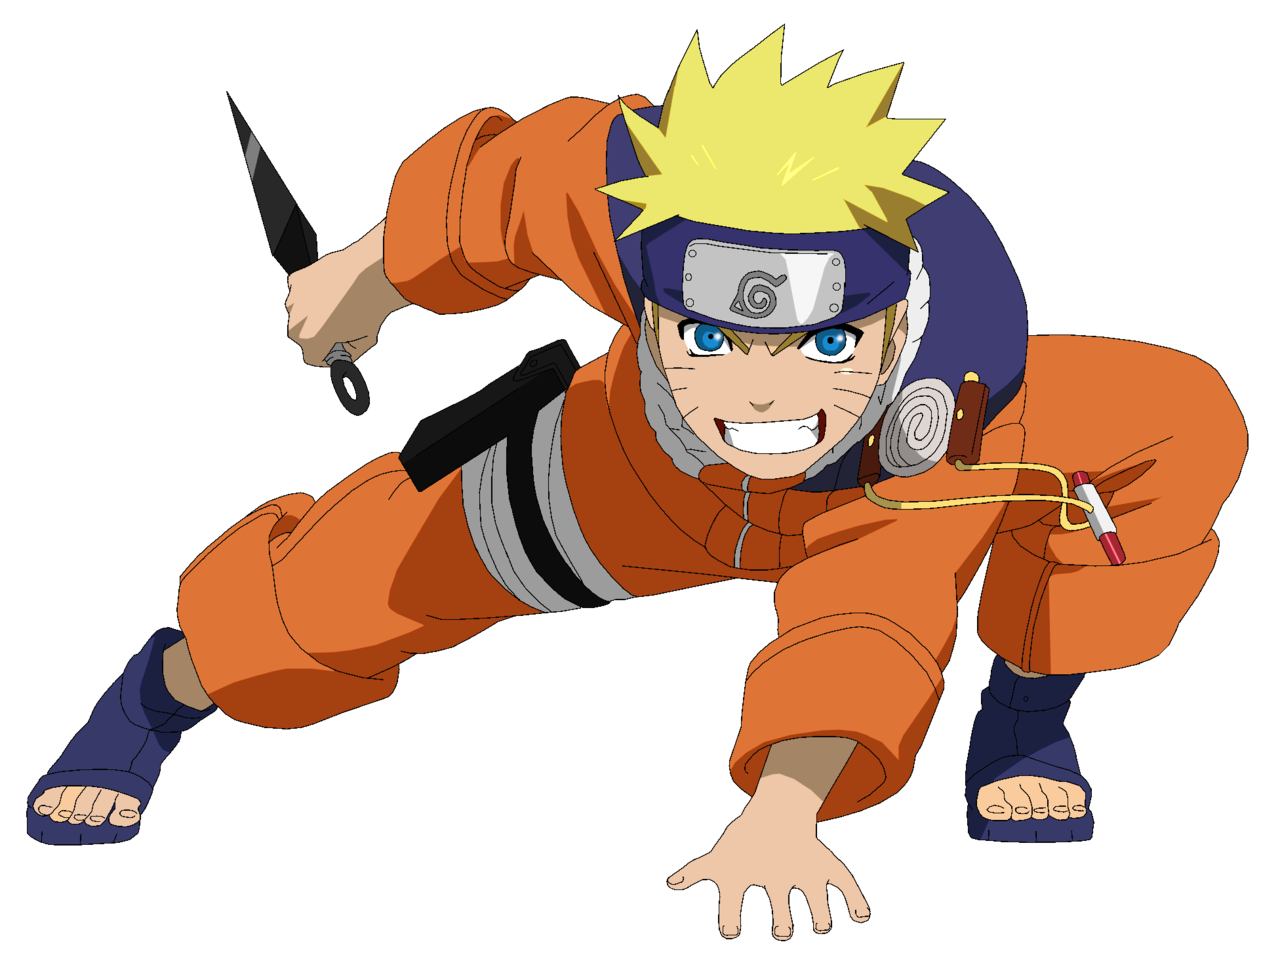 Naruto: Quanto tempo para maratonar?